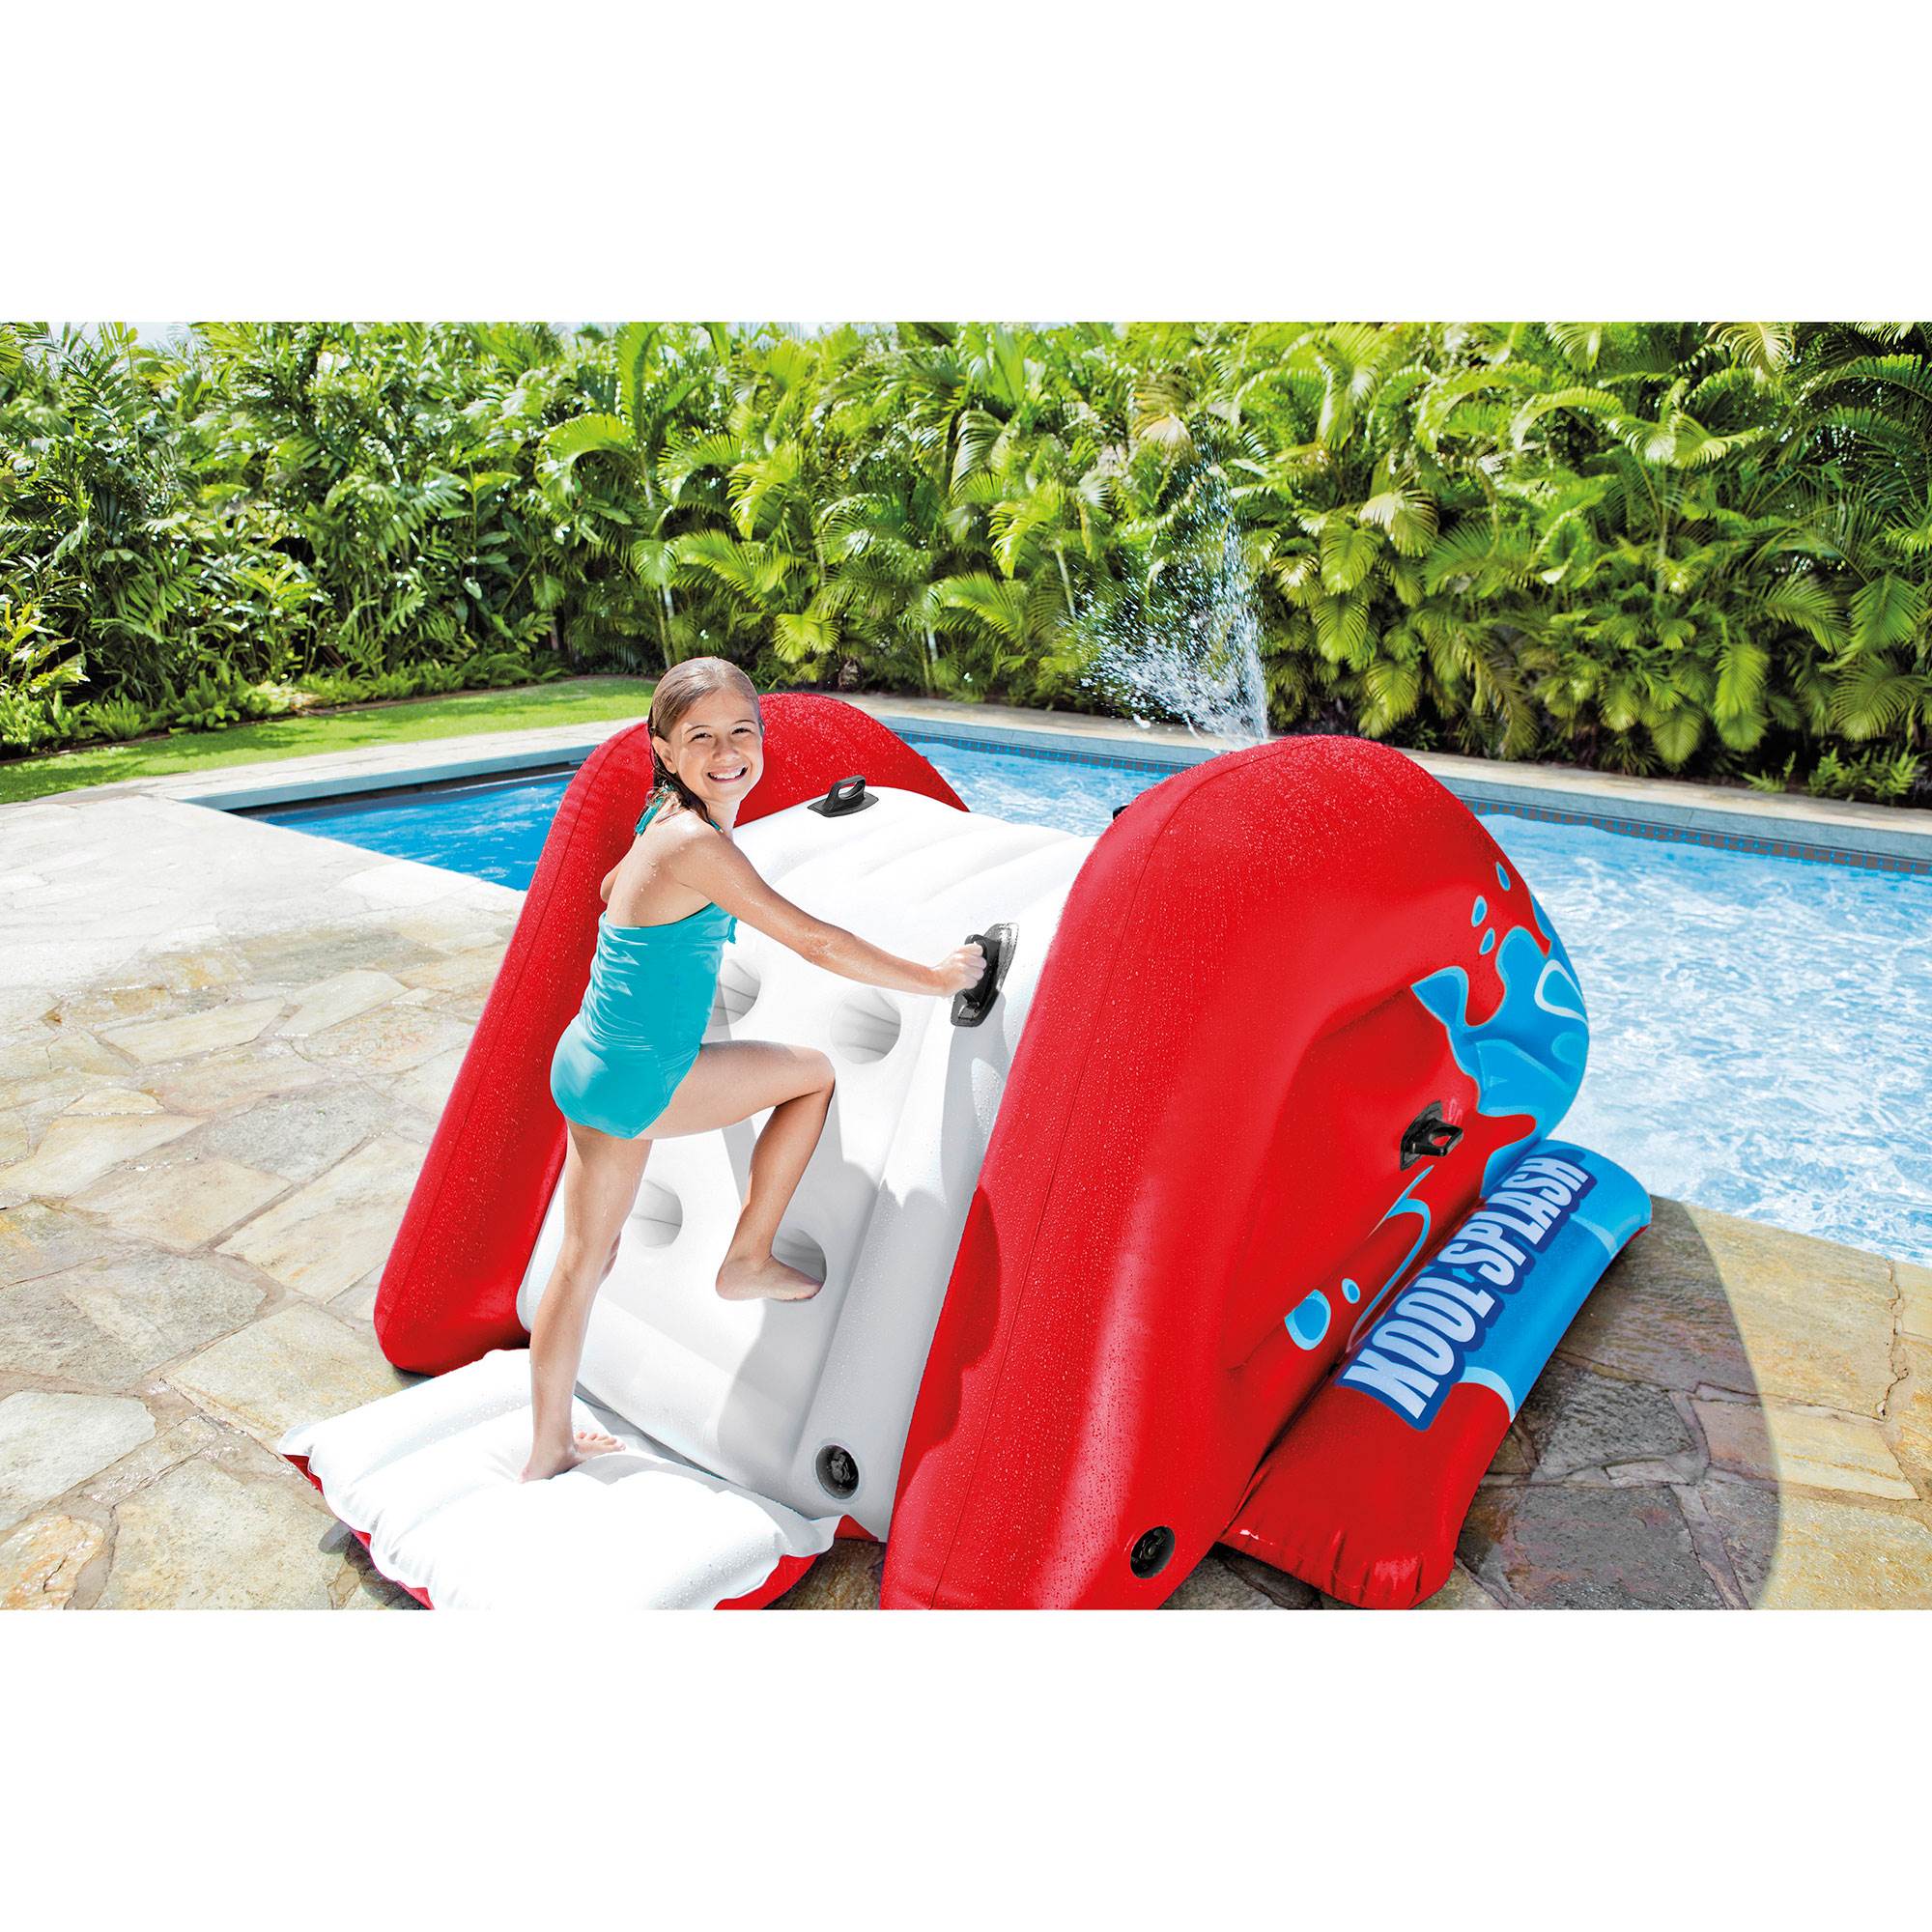 Intex Kool Splash Inflatable Pool Water Slide Play Center With Sprayer Red Ebay